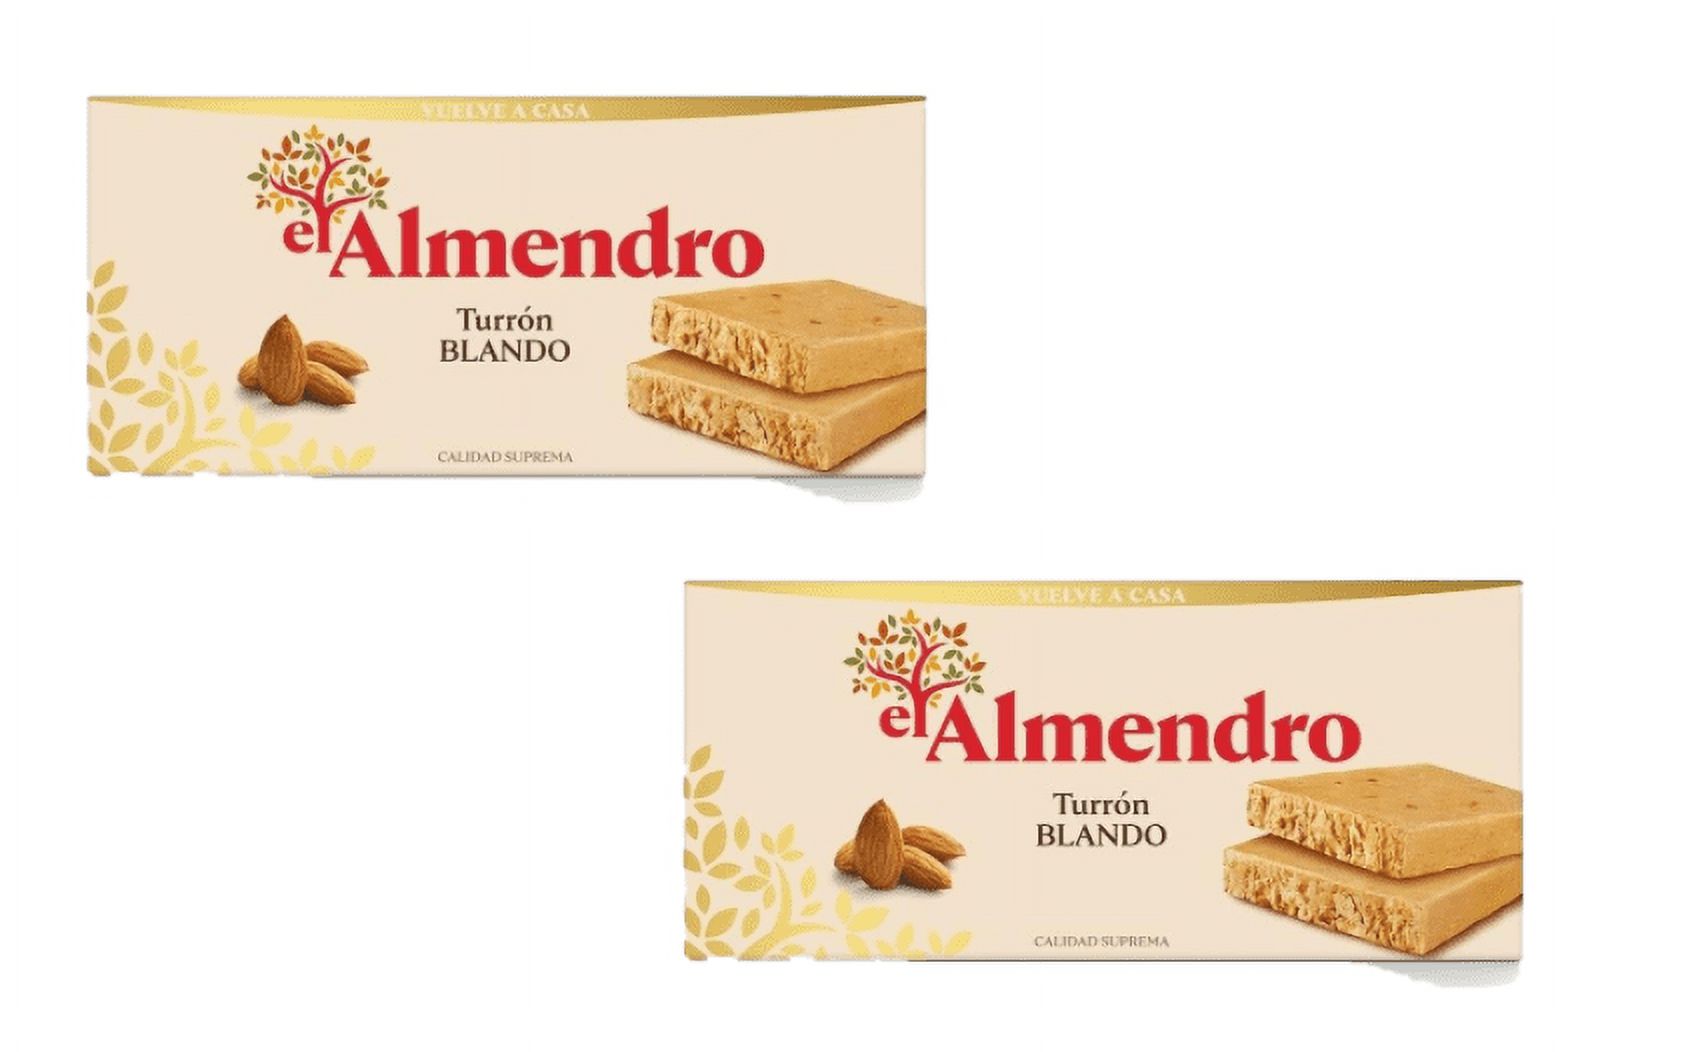 El Almendro Turron Blando 200 grs (7 oz.) 2-Pack - image 1 of 2